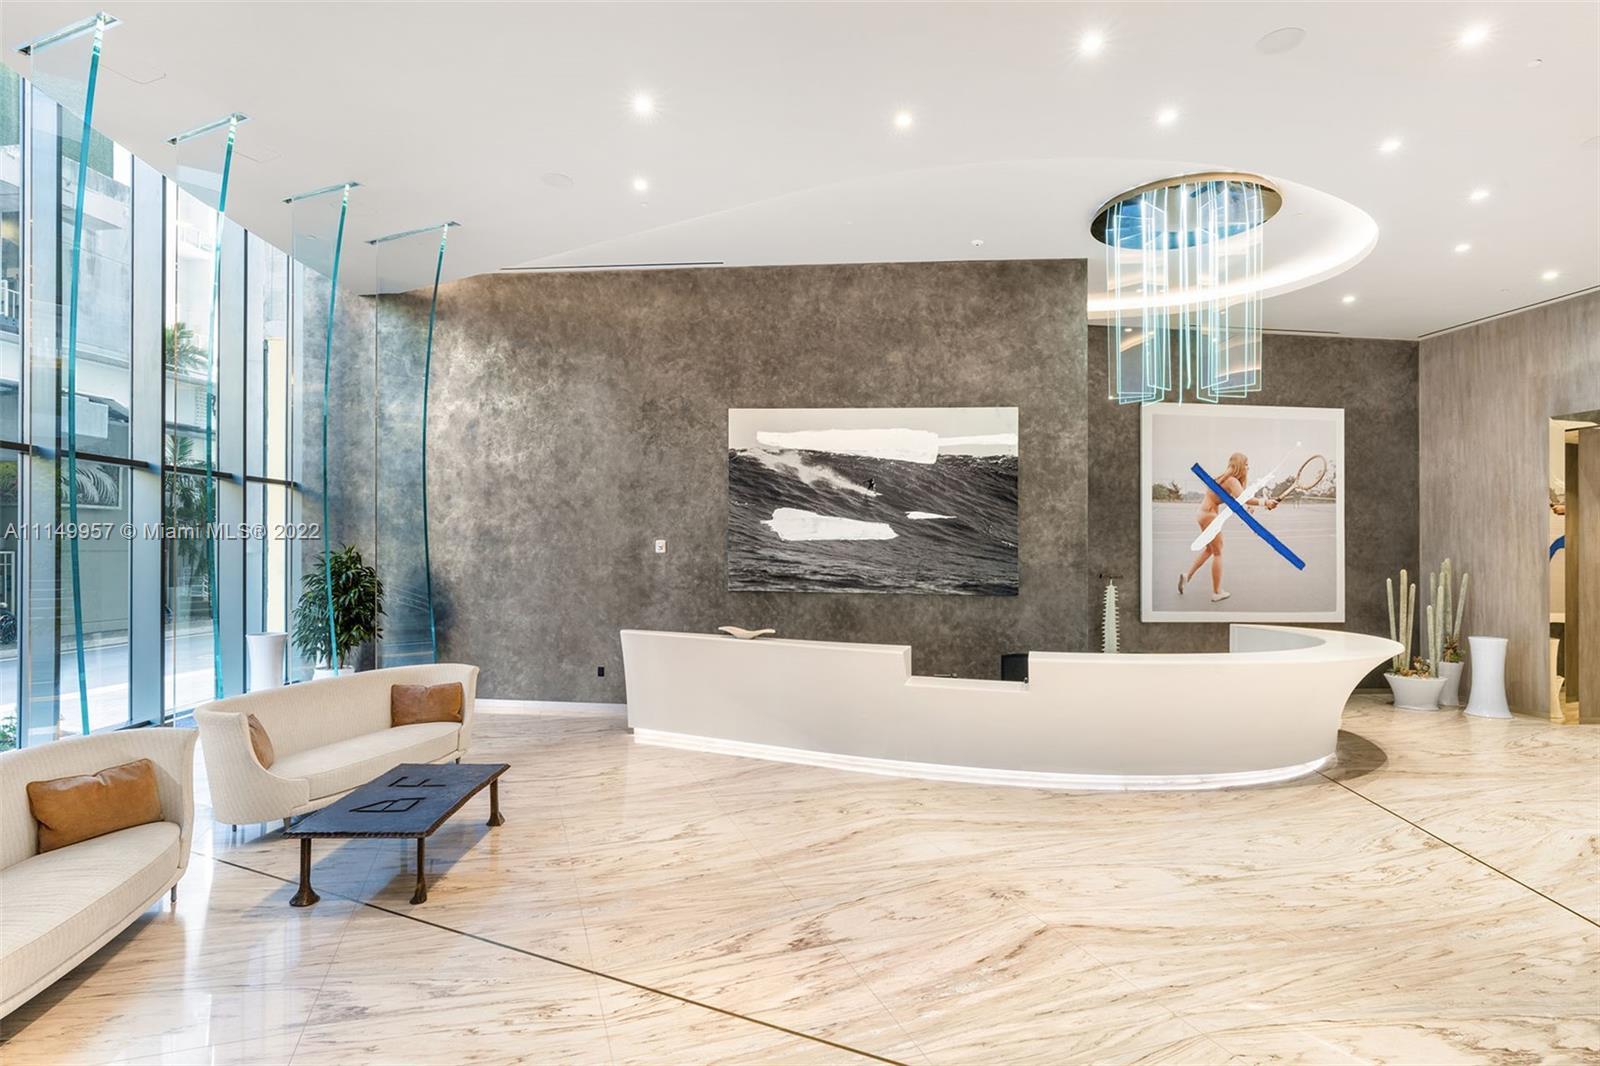 LOCATION, LOCATION, LOCATION and Ultra Luxury defines Brickell Flatiron. This huge 1 bedroom 1.5 bat